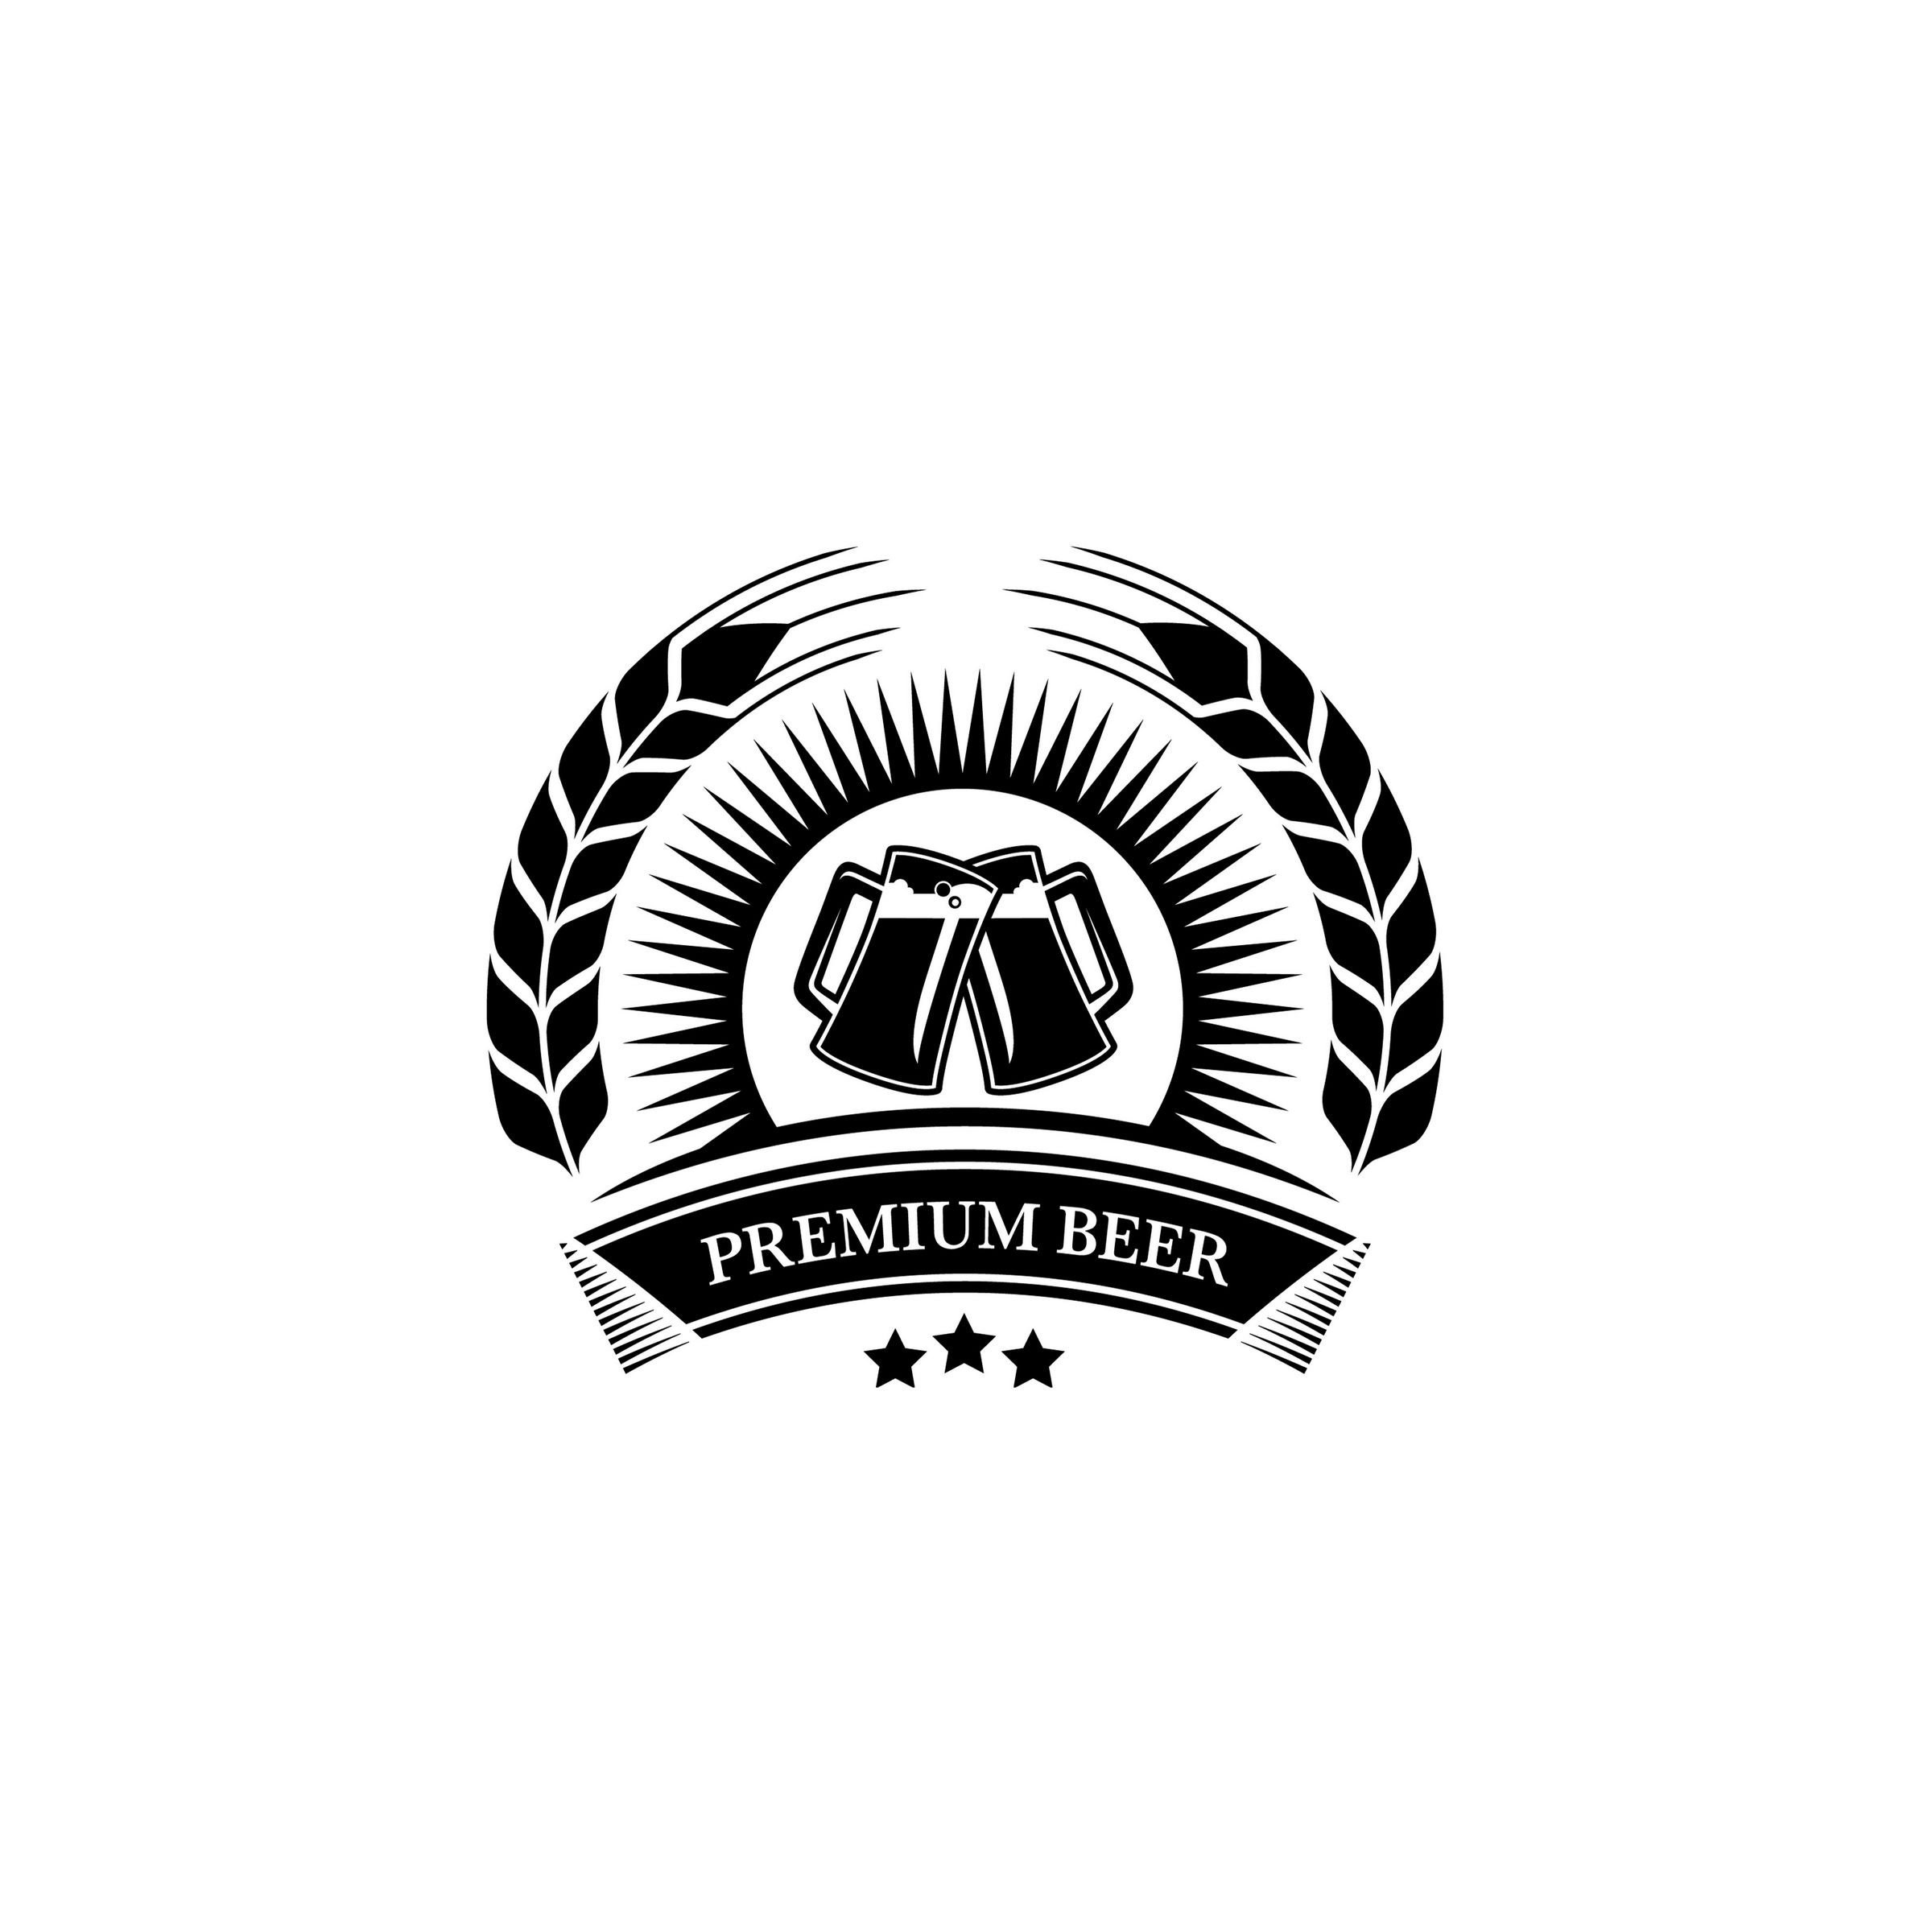 PM International Logo PNG Vector (EPS) Free Download